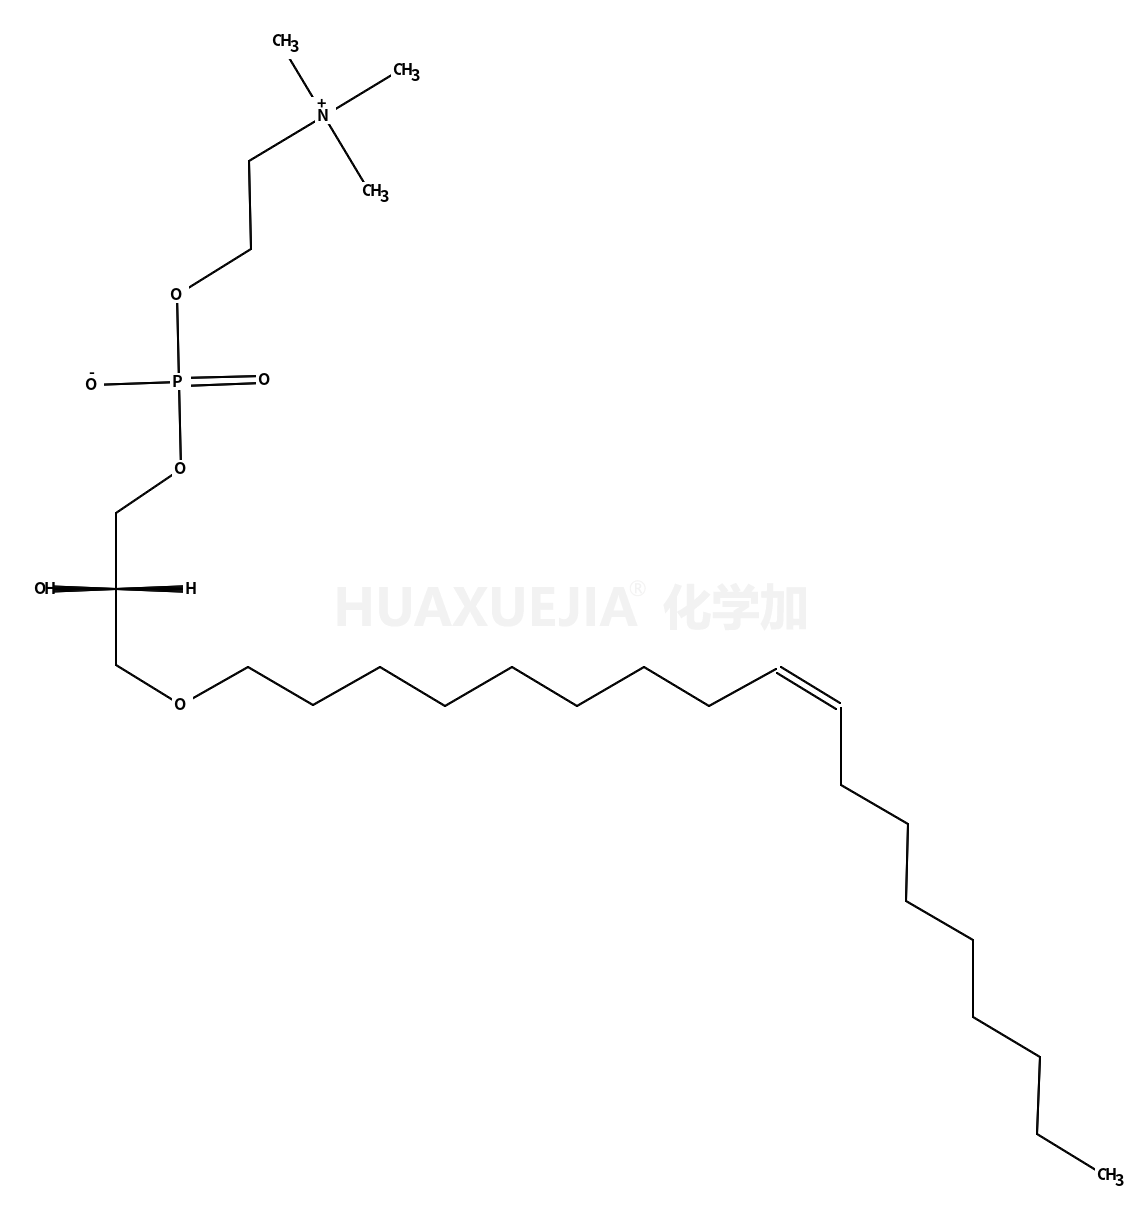 1-O-(9Z)octadecenyl-2-hydroxy-sn-glycero-3-phosphocholine